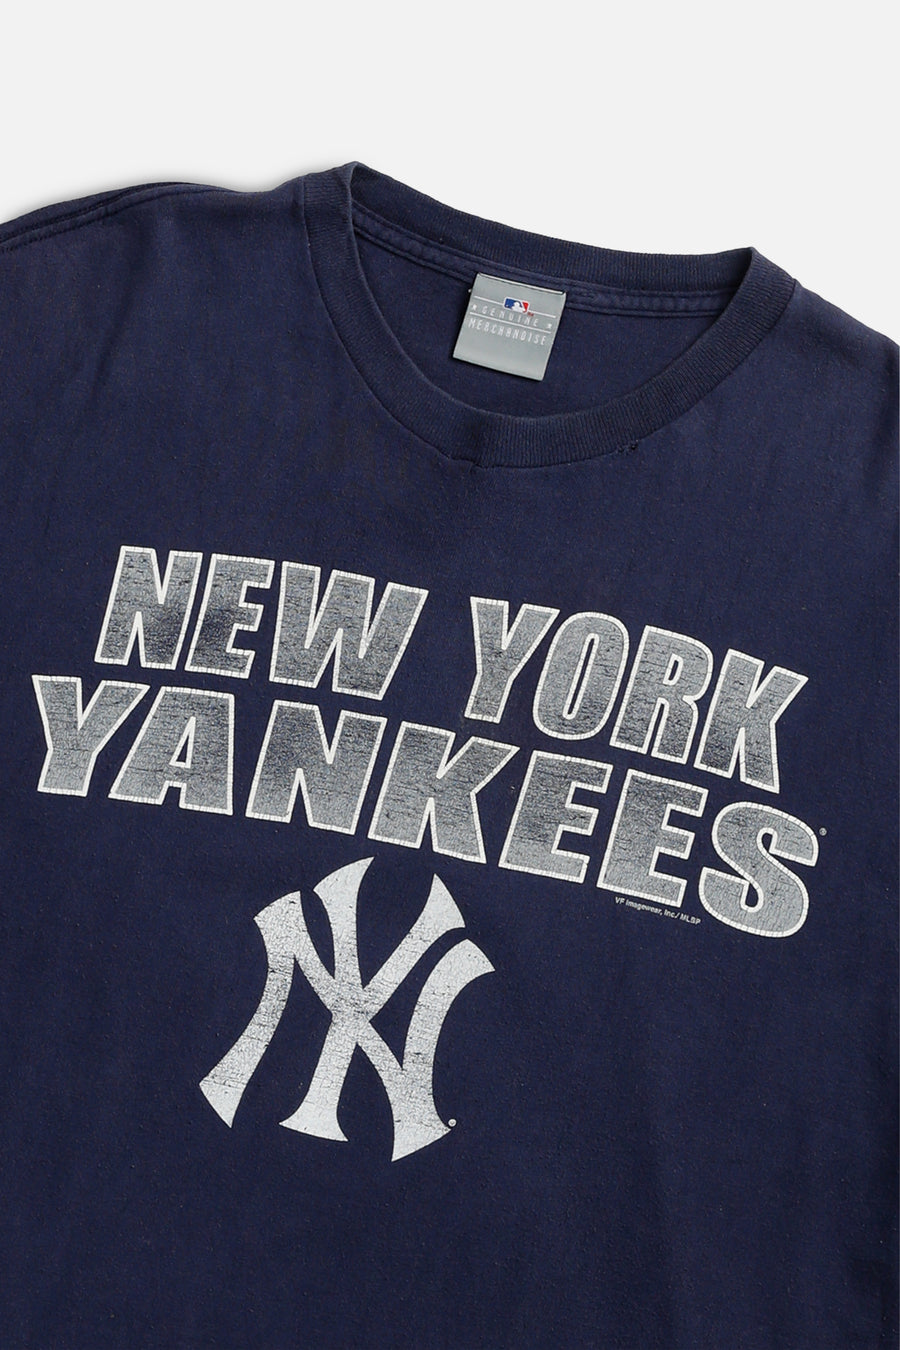 Vintage NY Yankees MLB Tee - L